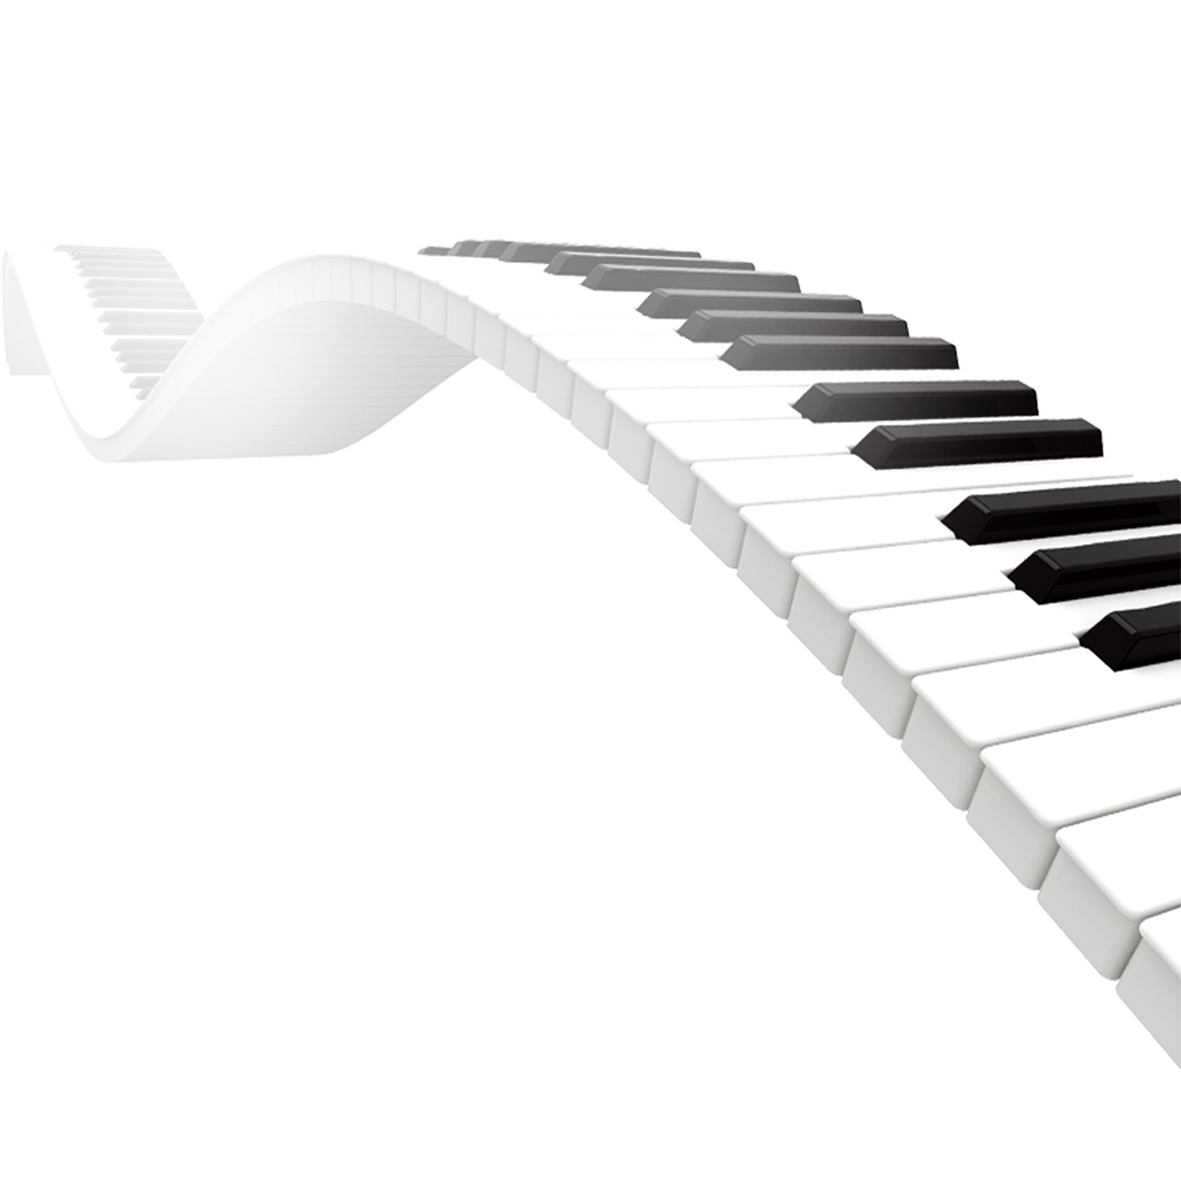 Piano Pic Music Keyboard Download HD PNG Image